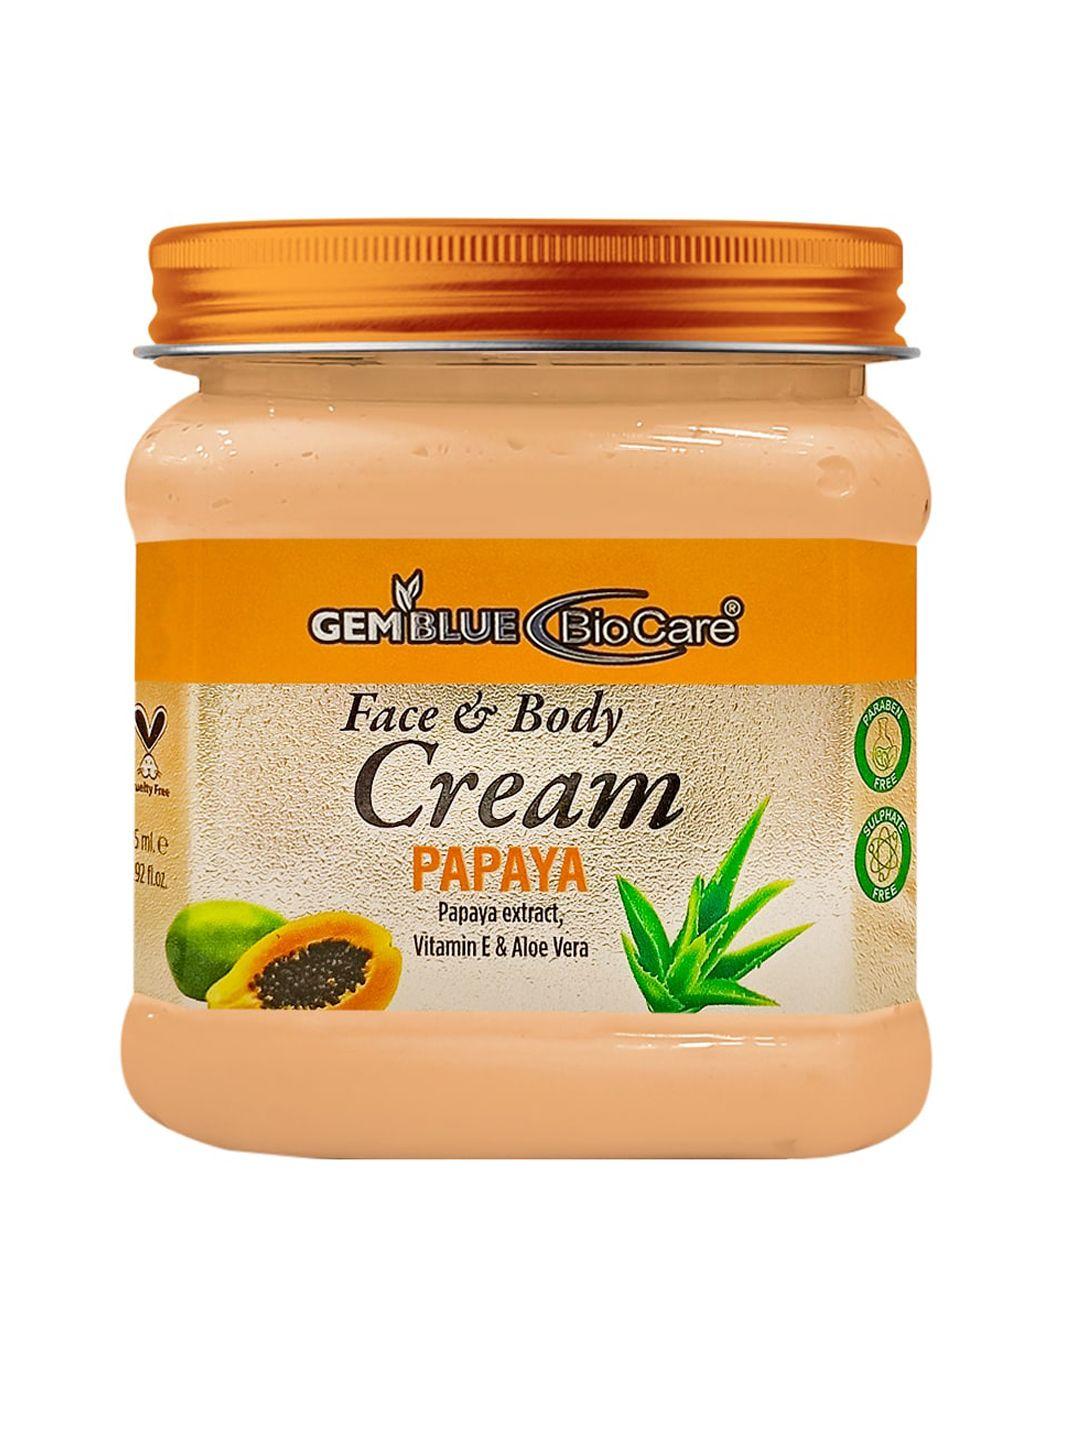 gemblue biocare papaya face & body cream with vitamin e & aloe vera - 385 ml